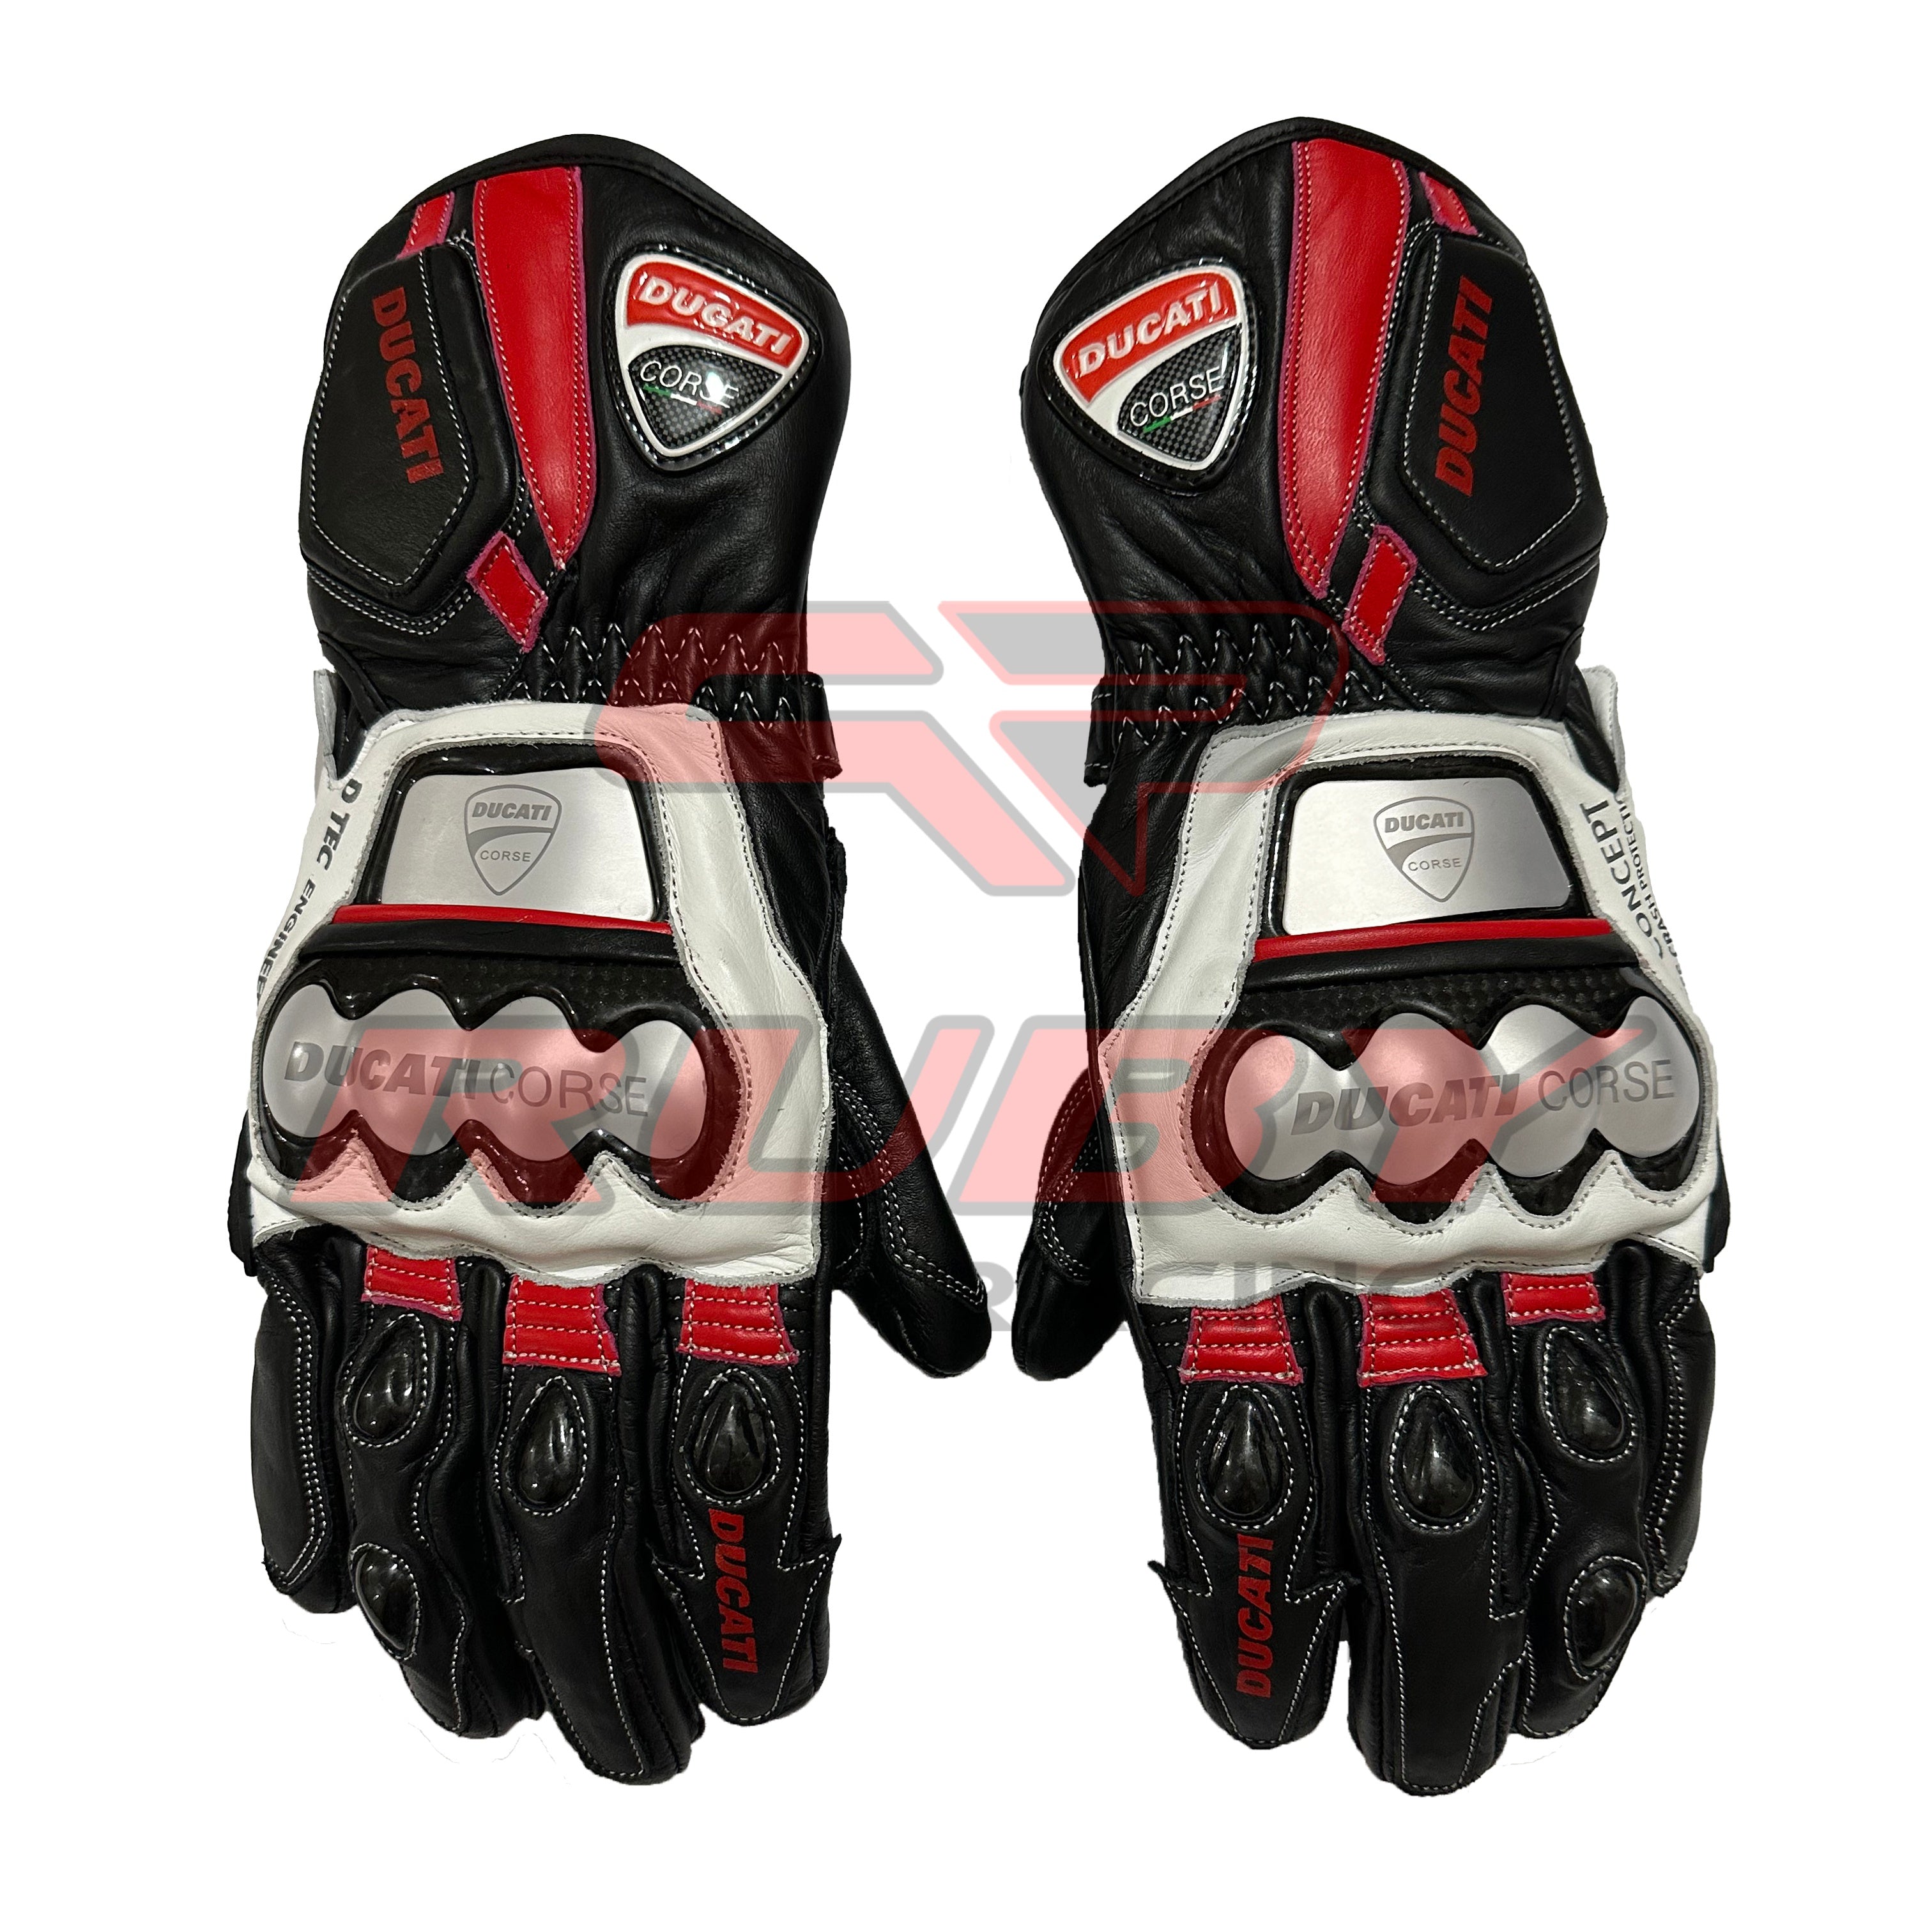 Ducati C6 Motorbike Leather Racing Gloves